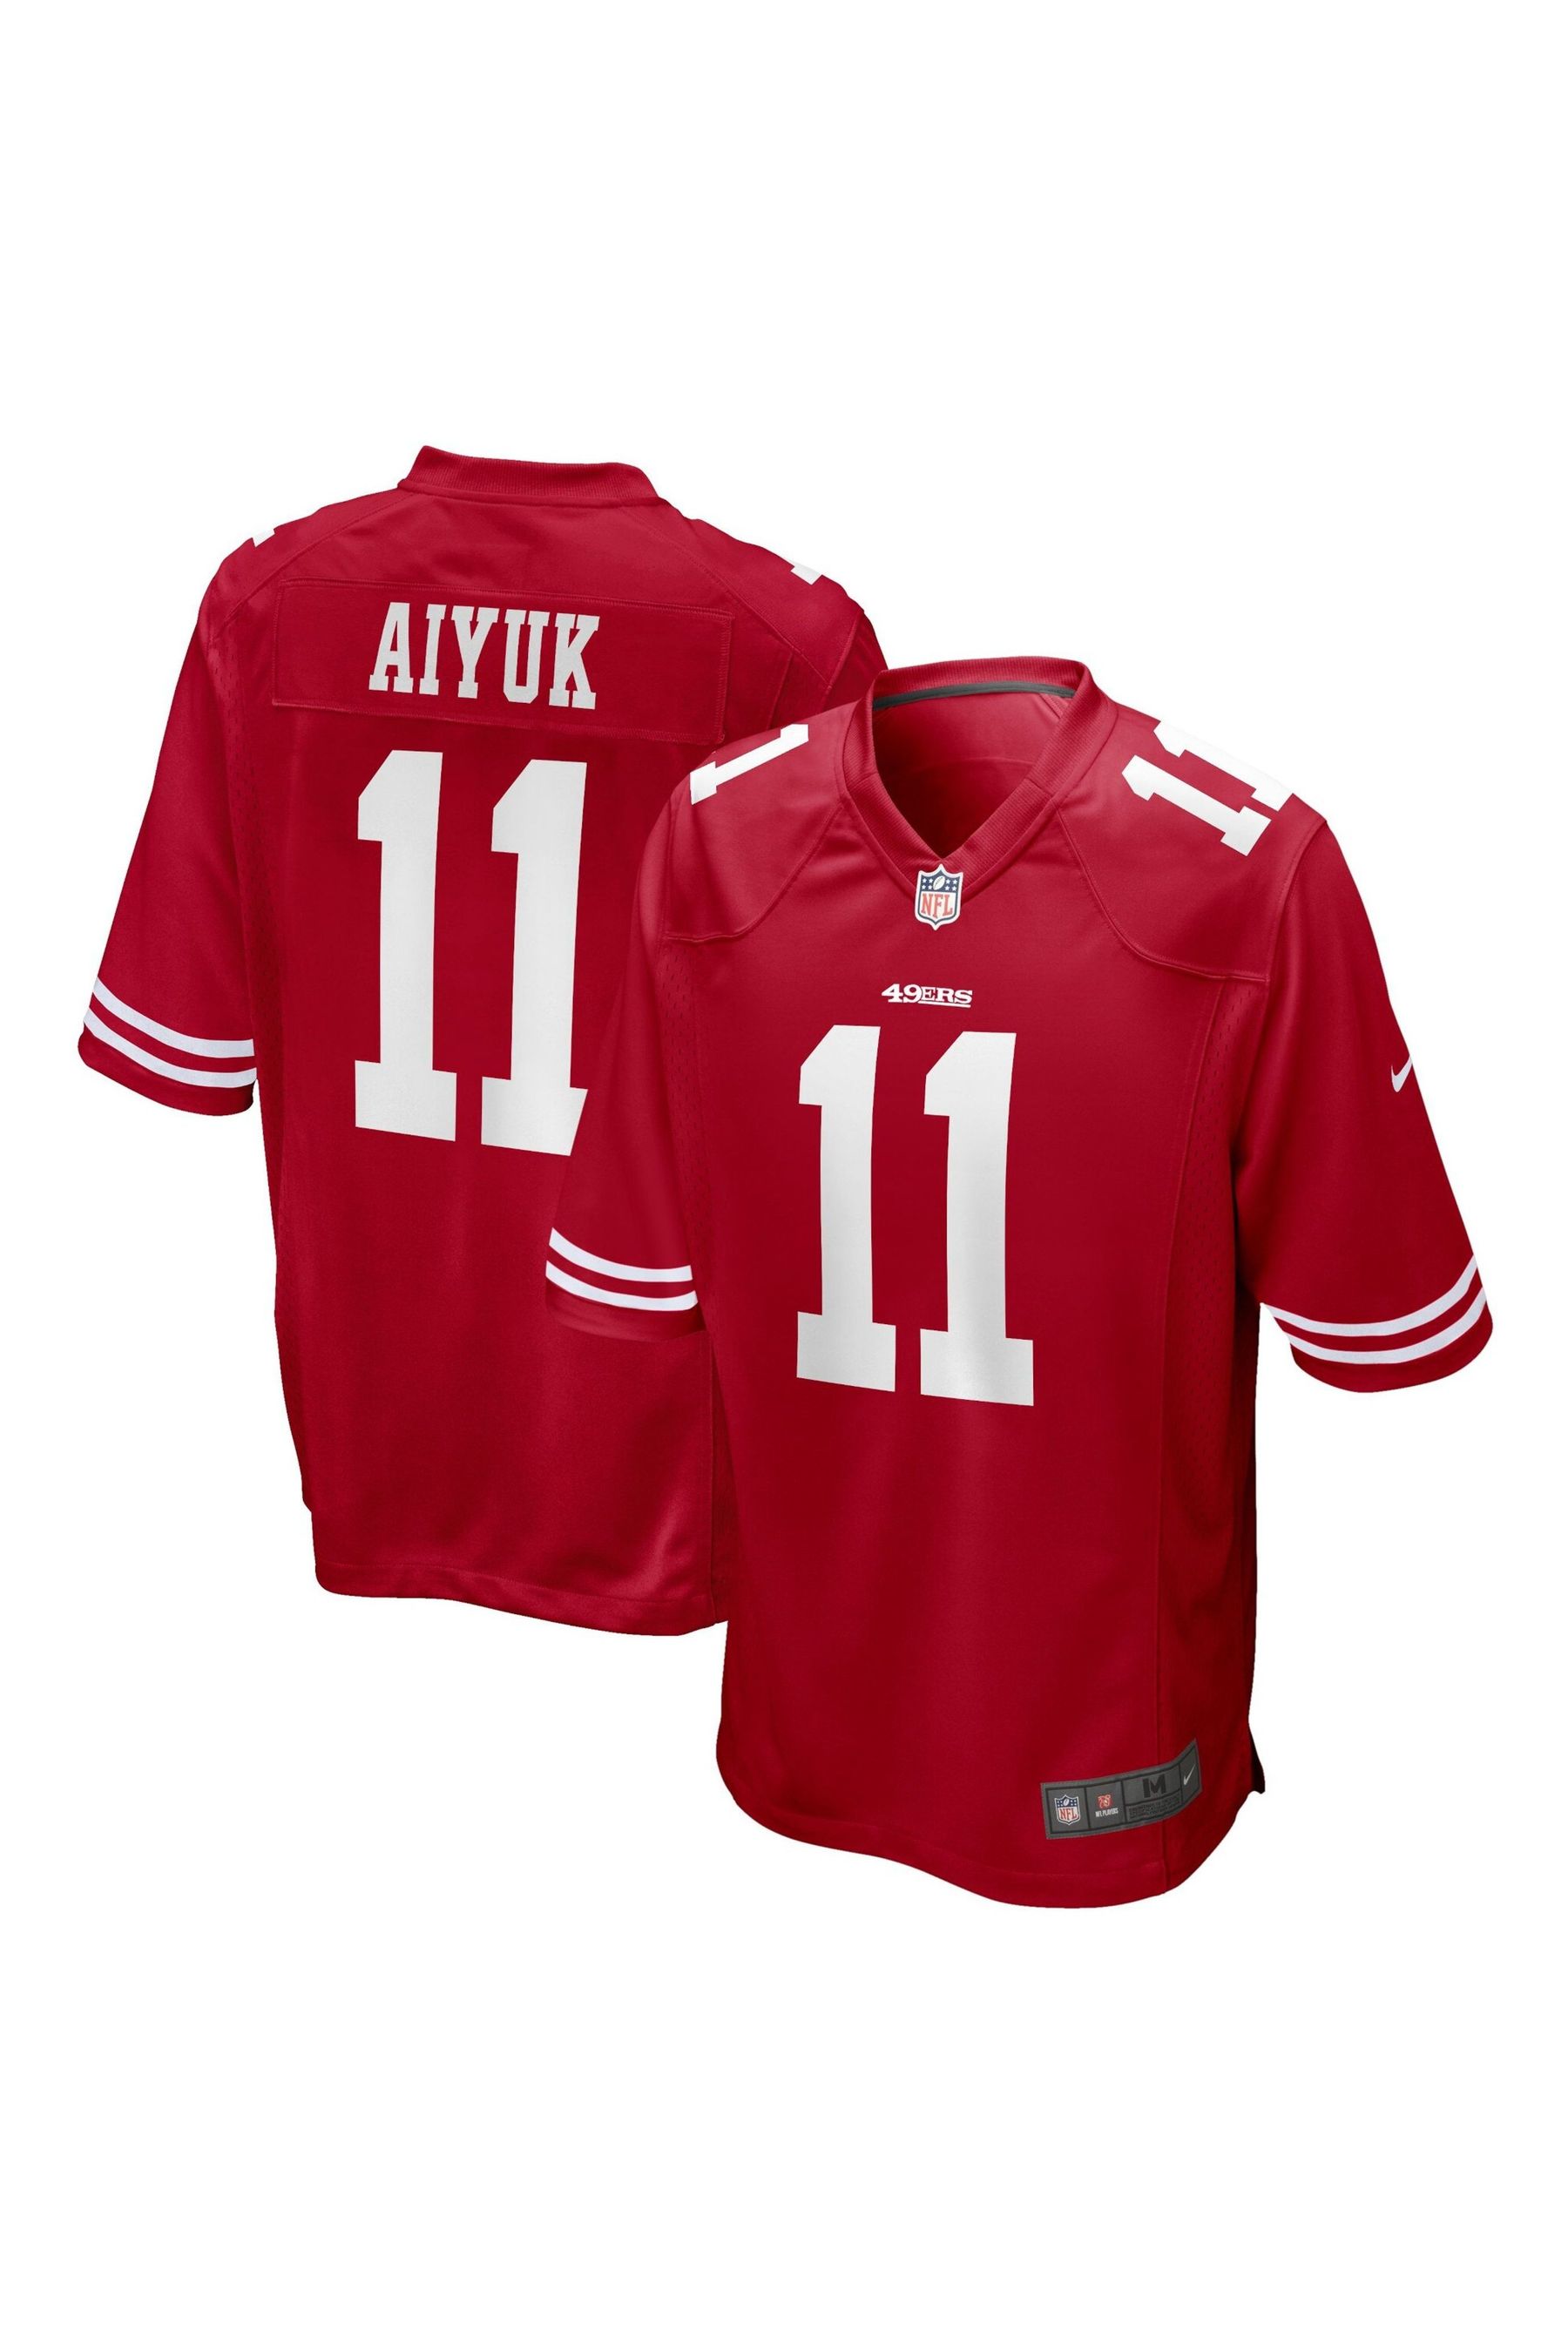 Buy Nike Red NFL San Francisco 49ers Home Game Jersey - Brandon Aiyuk ...